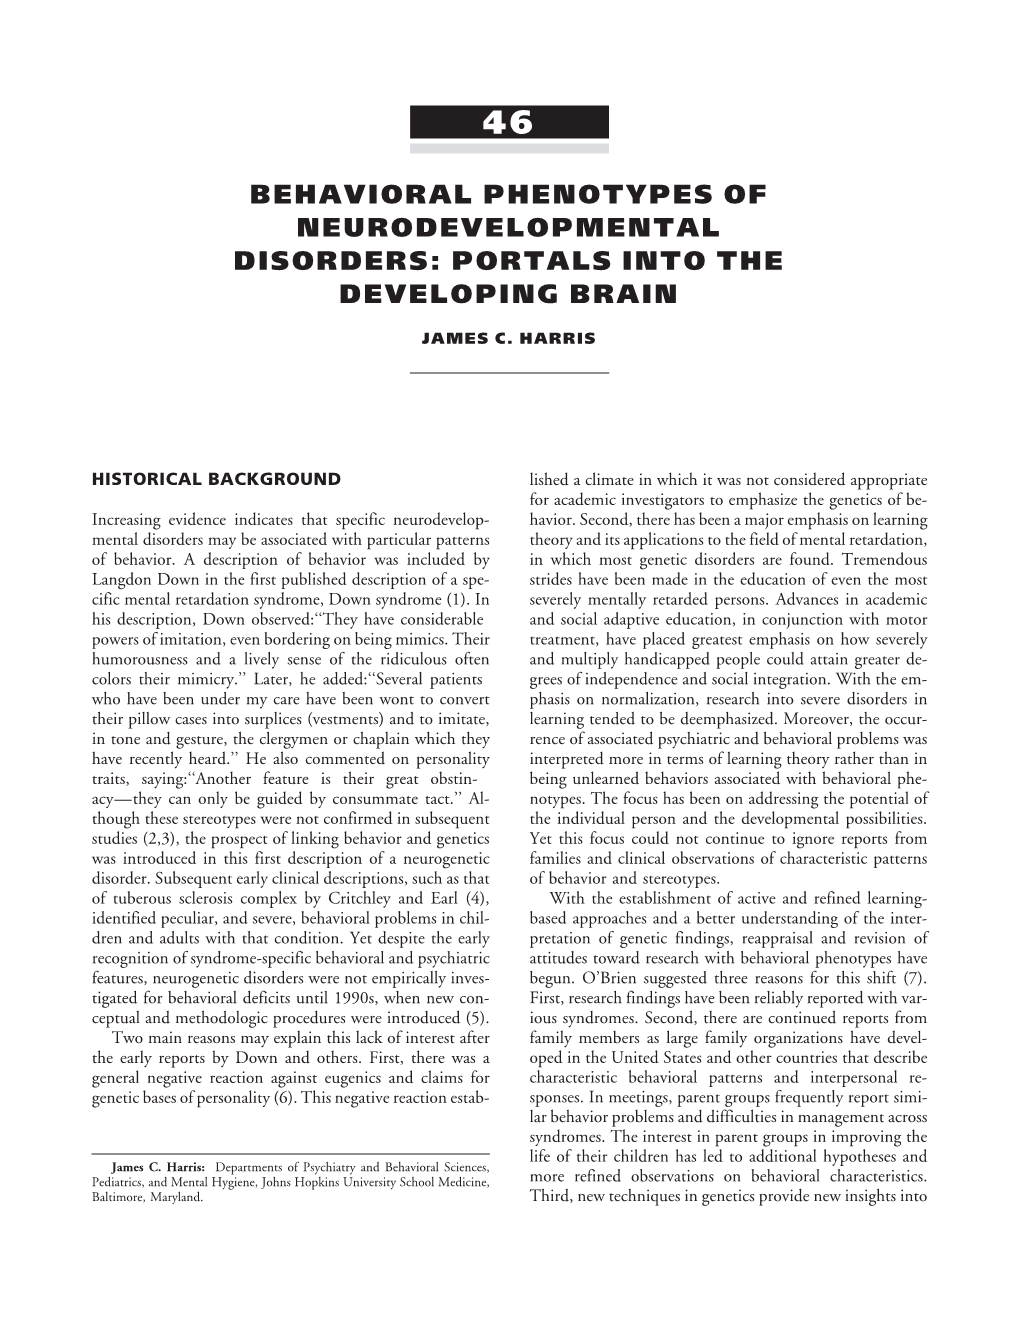 Behavioral Phenotypes of Neurodevelopmental Disorders: Portals Into the Developing Brain